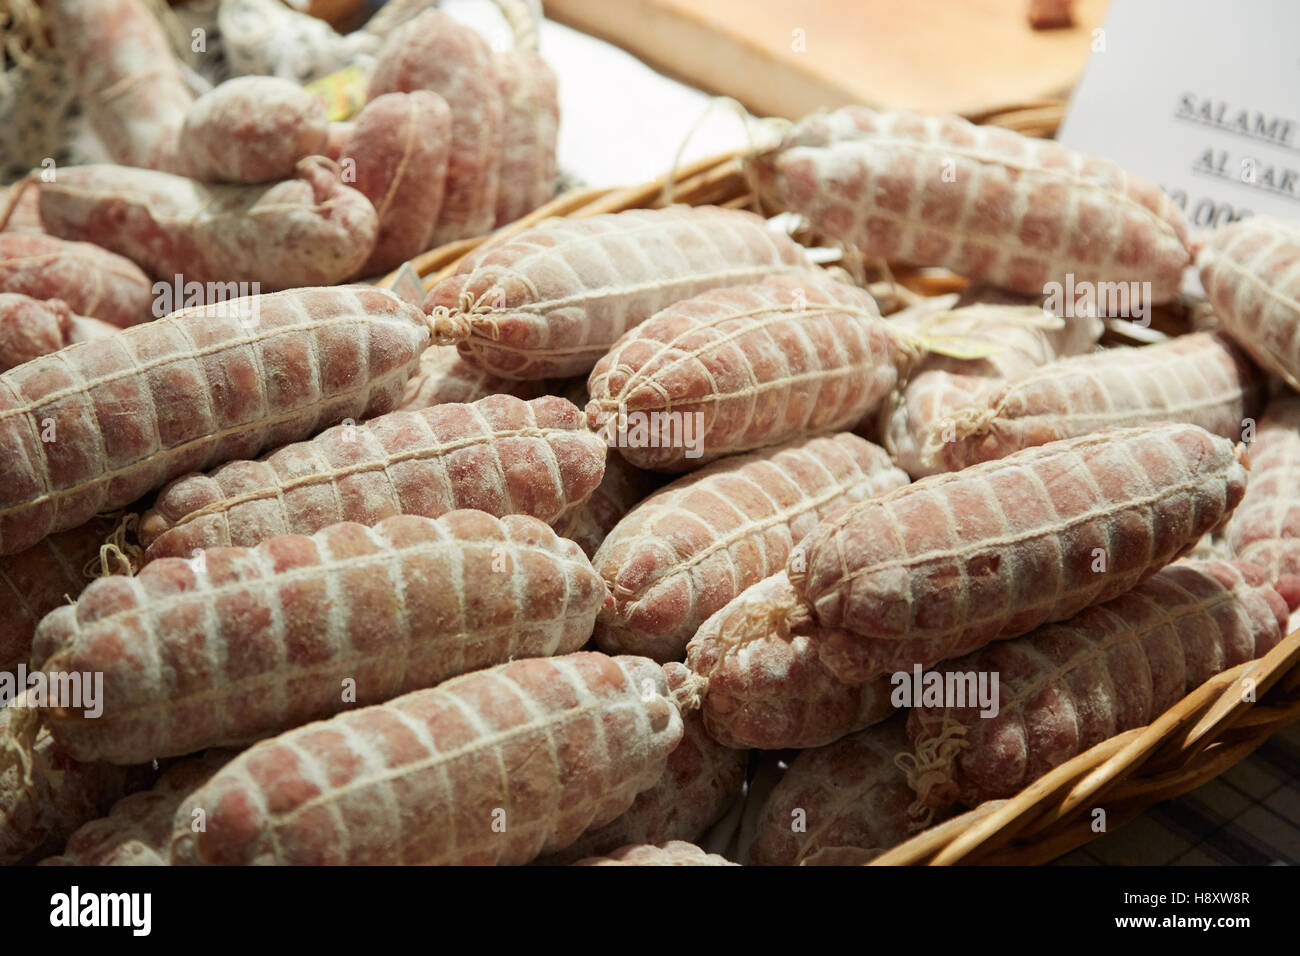 Truffle flavored salami on sale during Alba White Truffle Fair in Alba, Italy Stock Photo